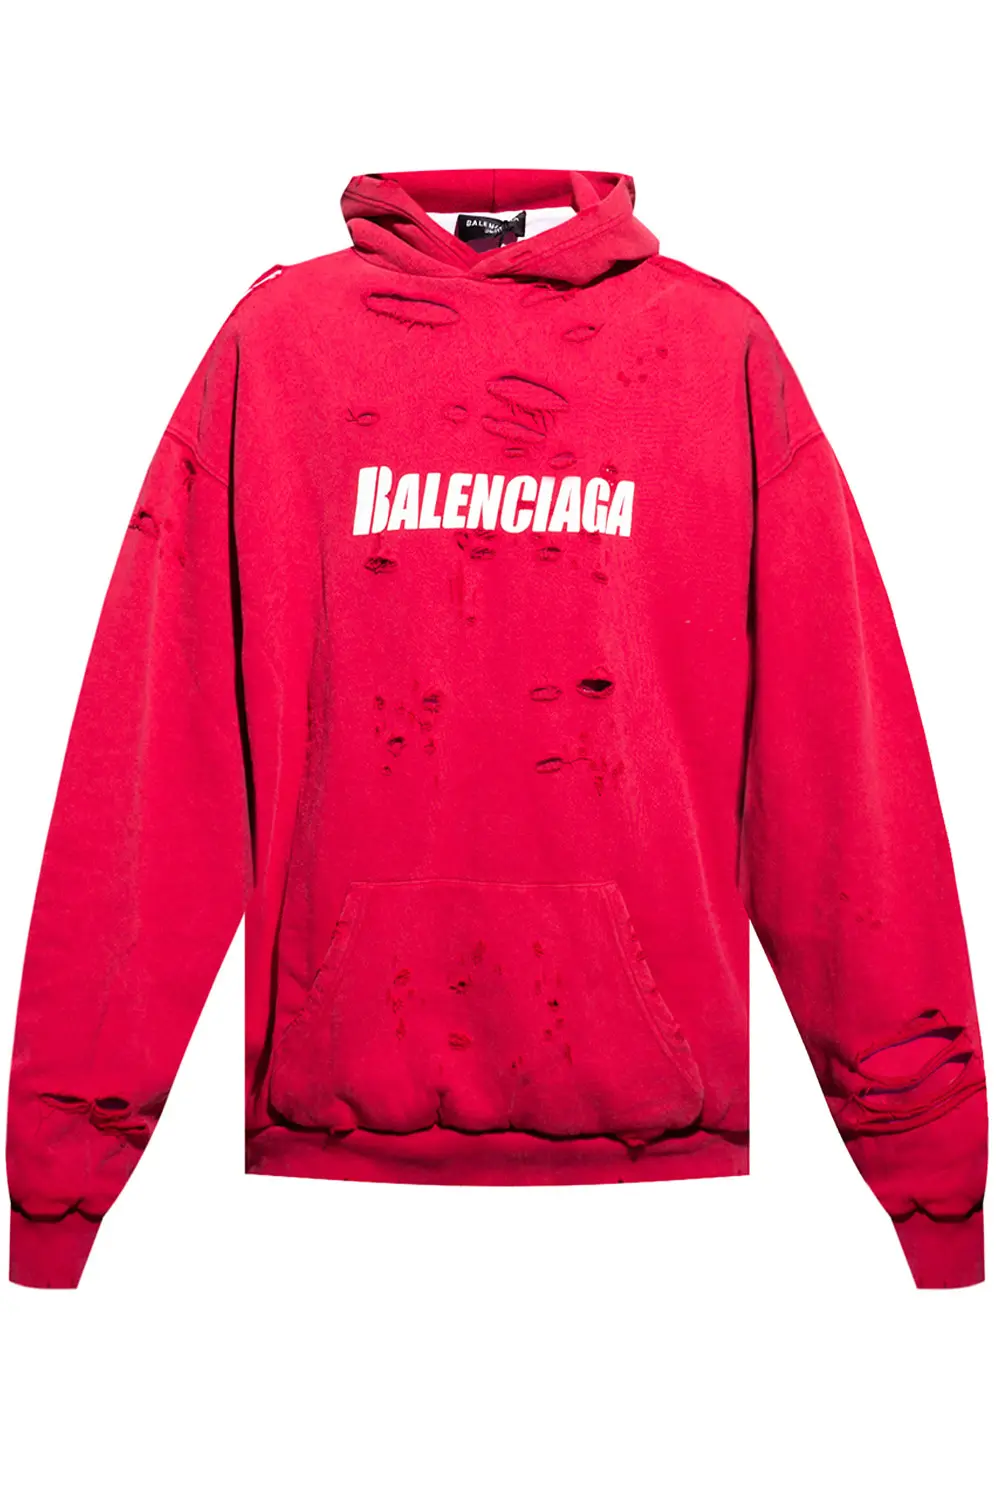 BALENCIAGA Sweatshirt With Holes バレンシアガ パーカー